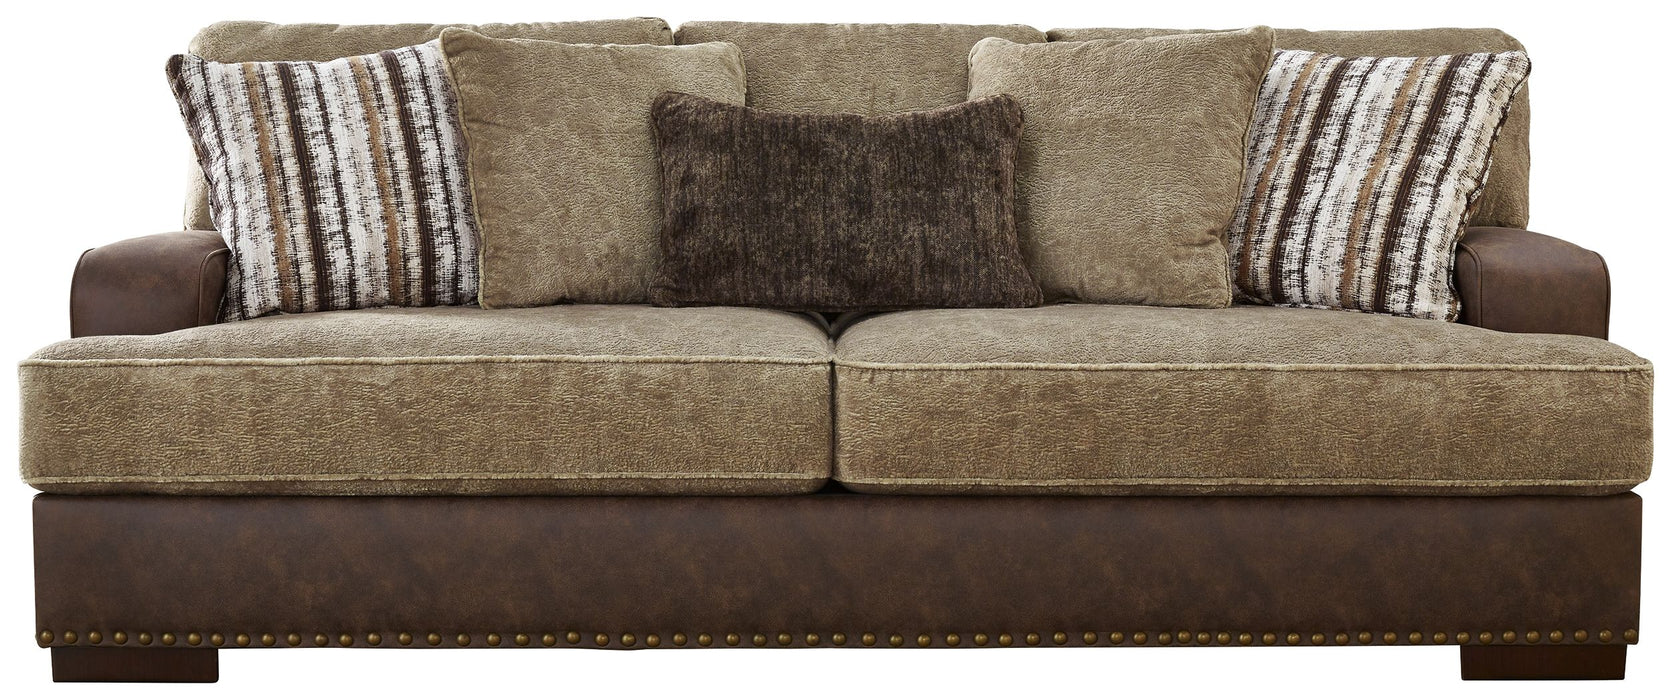 Alesbury - Chocolate - Sofa Capital Discount Furniture Home Furniture, Home Decor, Furniture